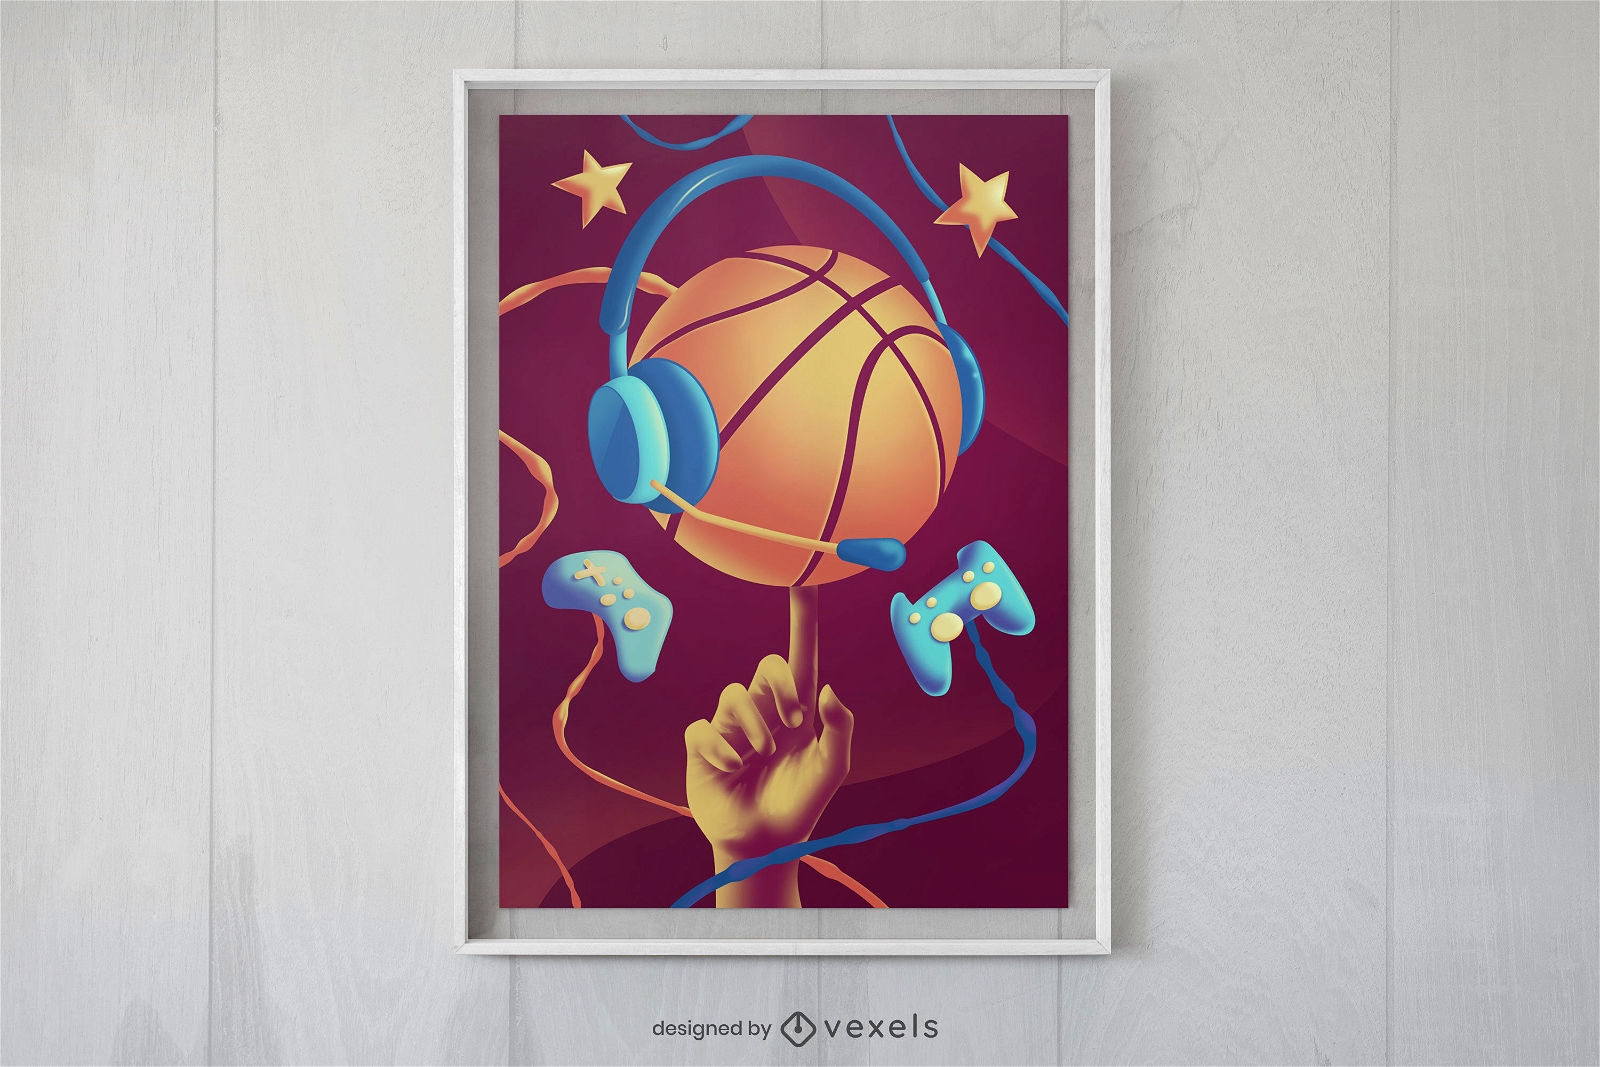 Plakatdesign für Basketball und Joysticks